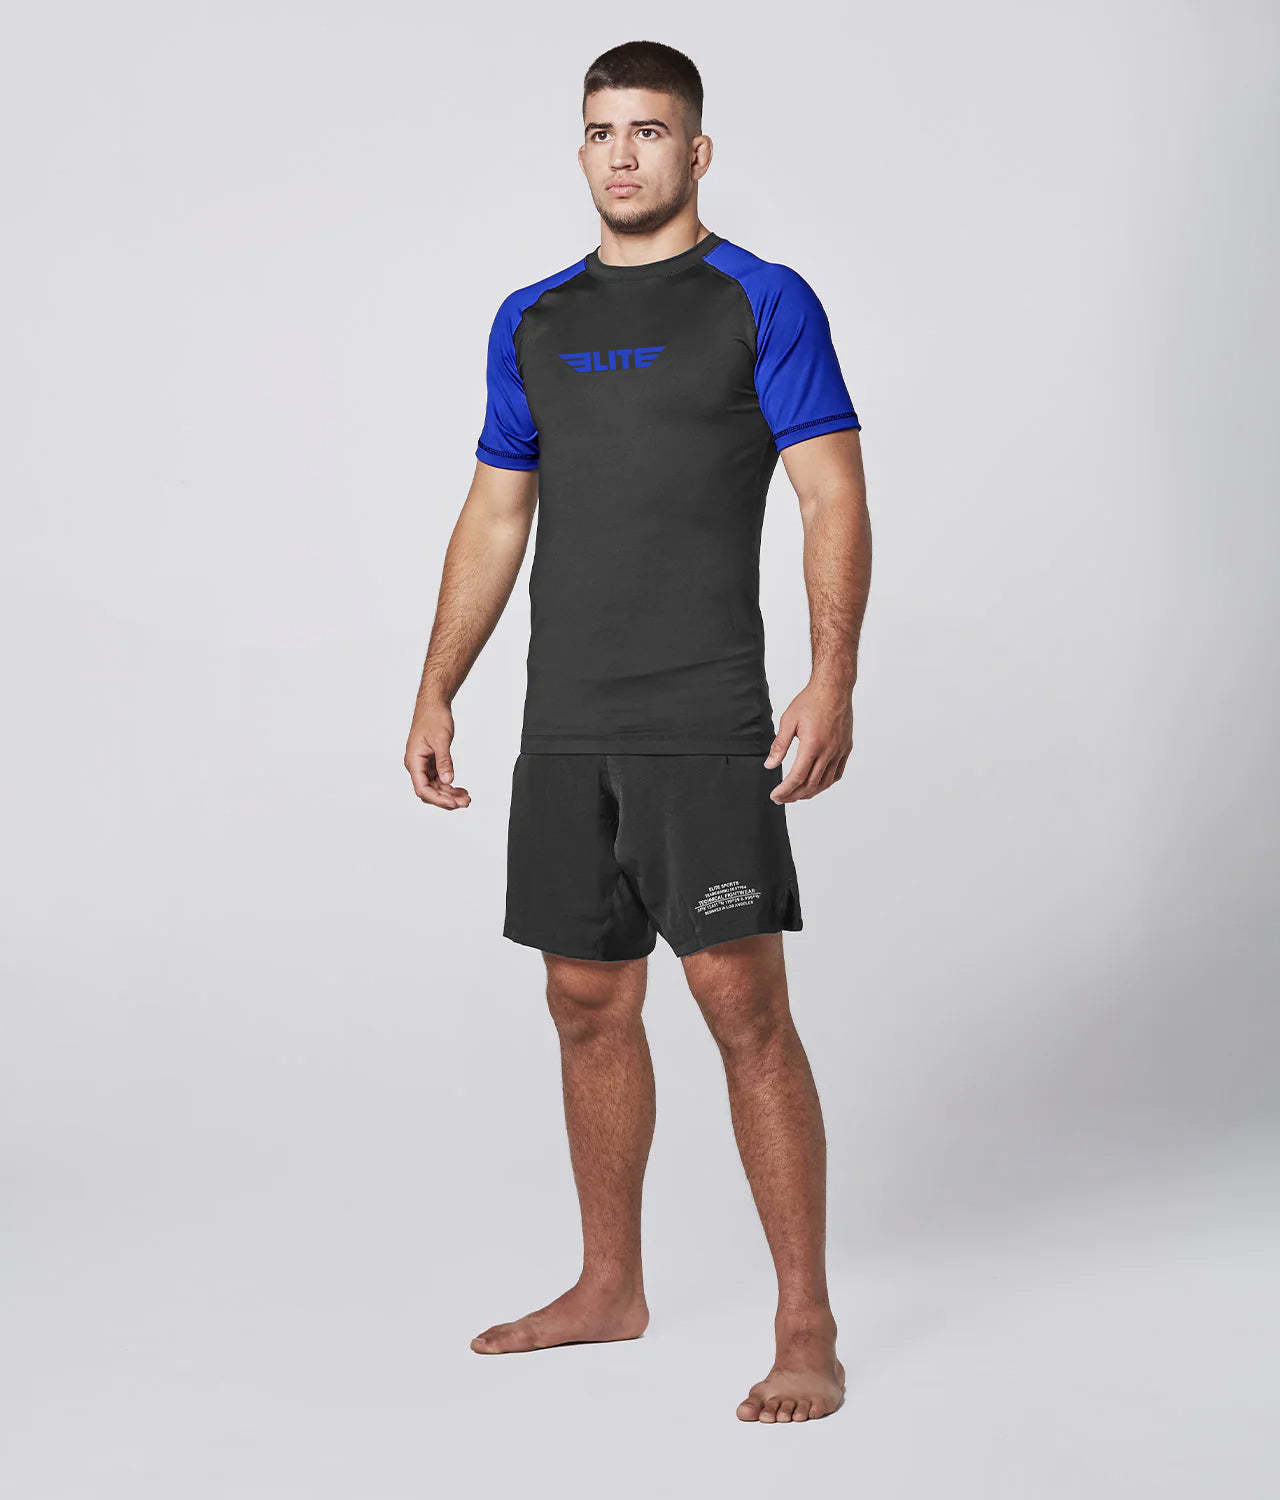 Elite Sports Men's Standard Blue Short Sleeve Jiu Jitsu BJJ Rash Guard Side View